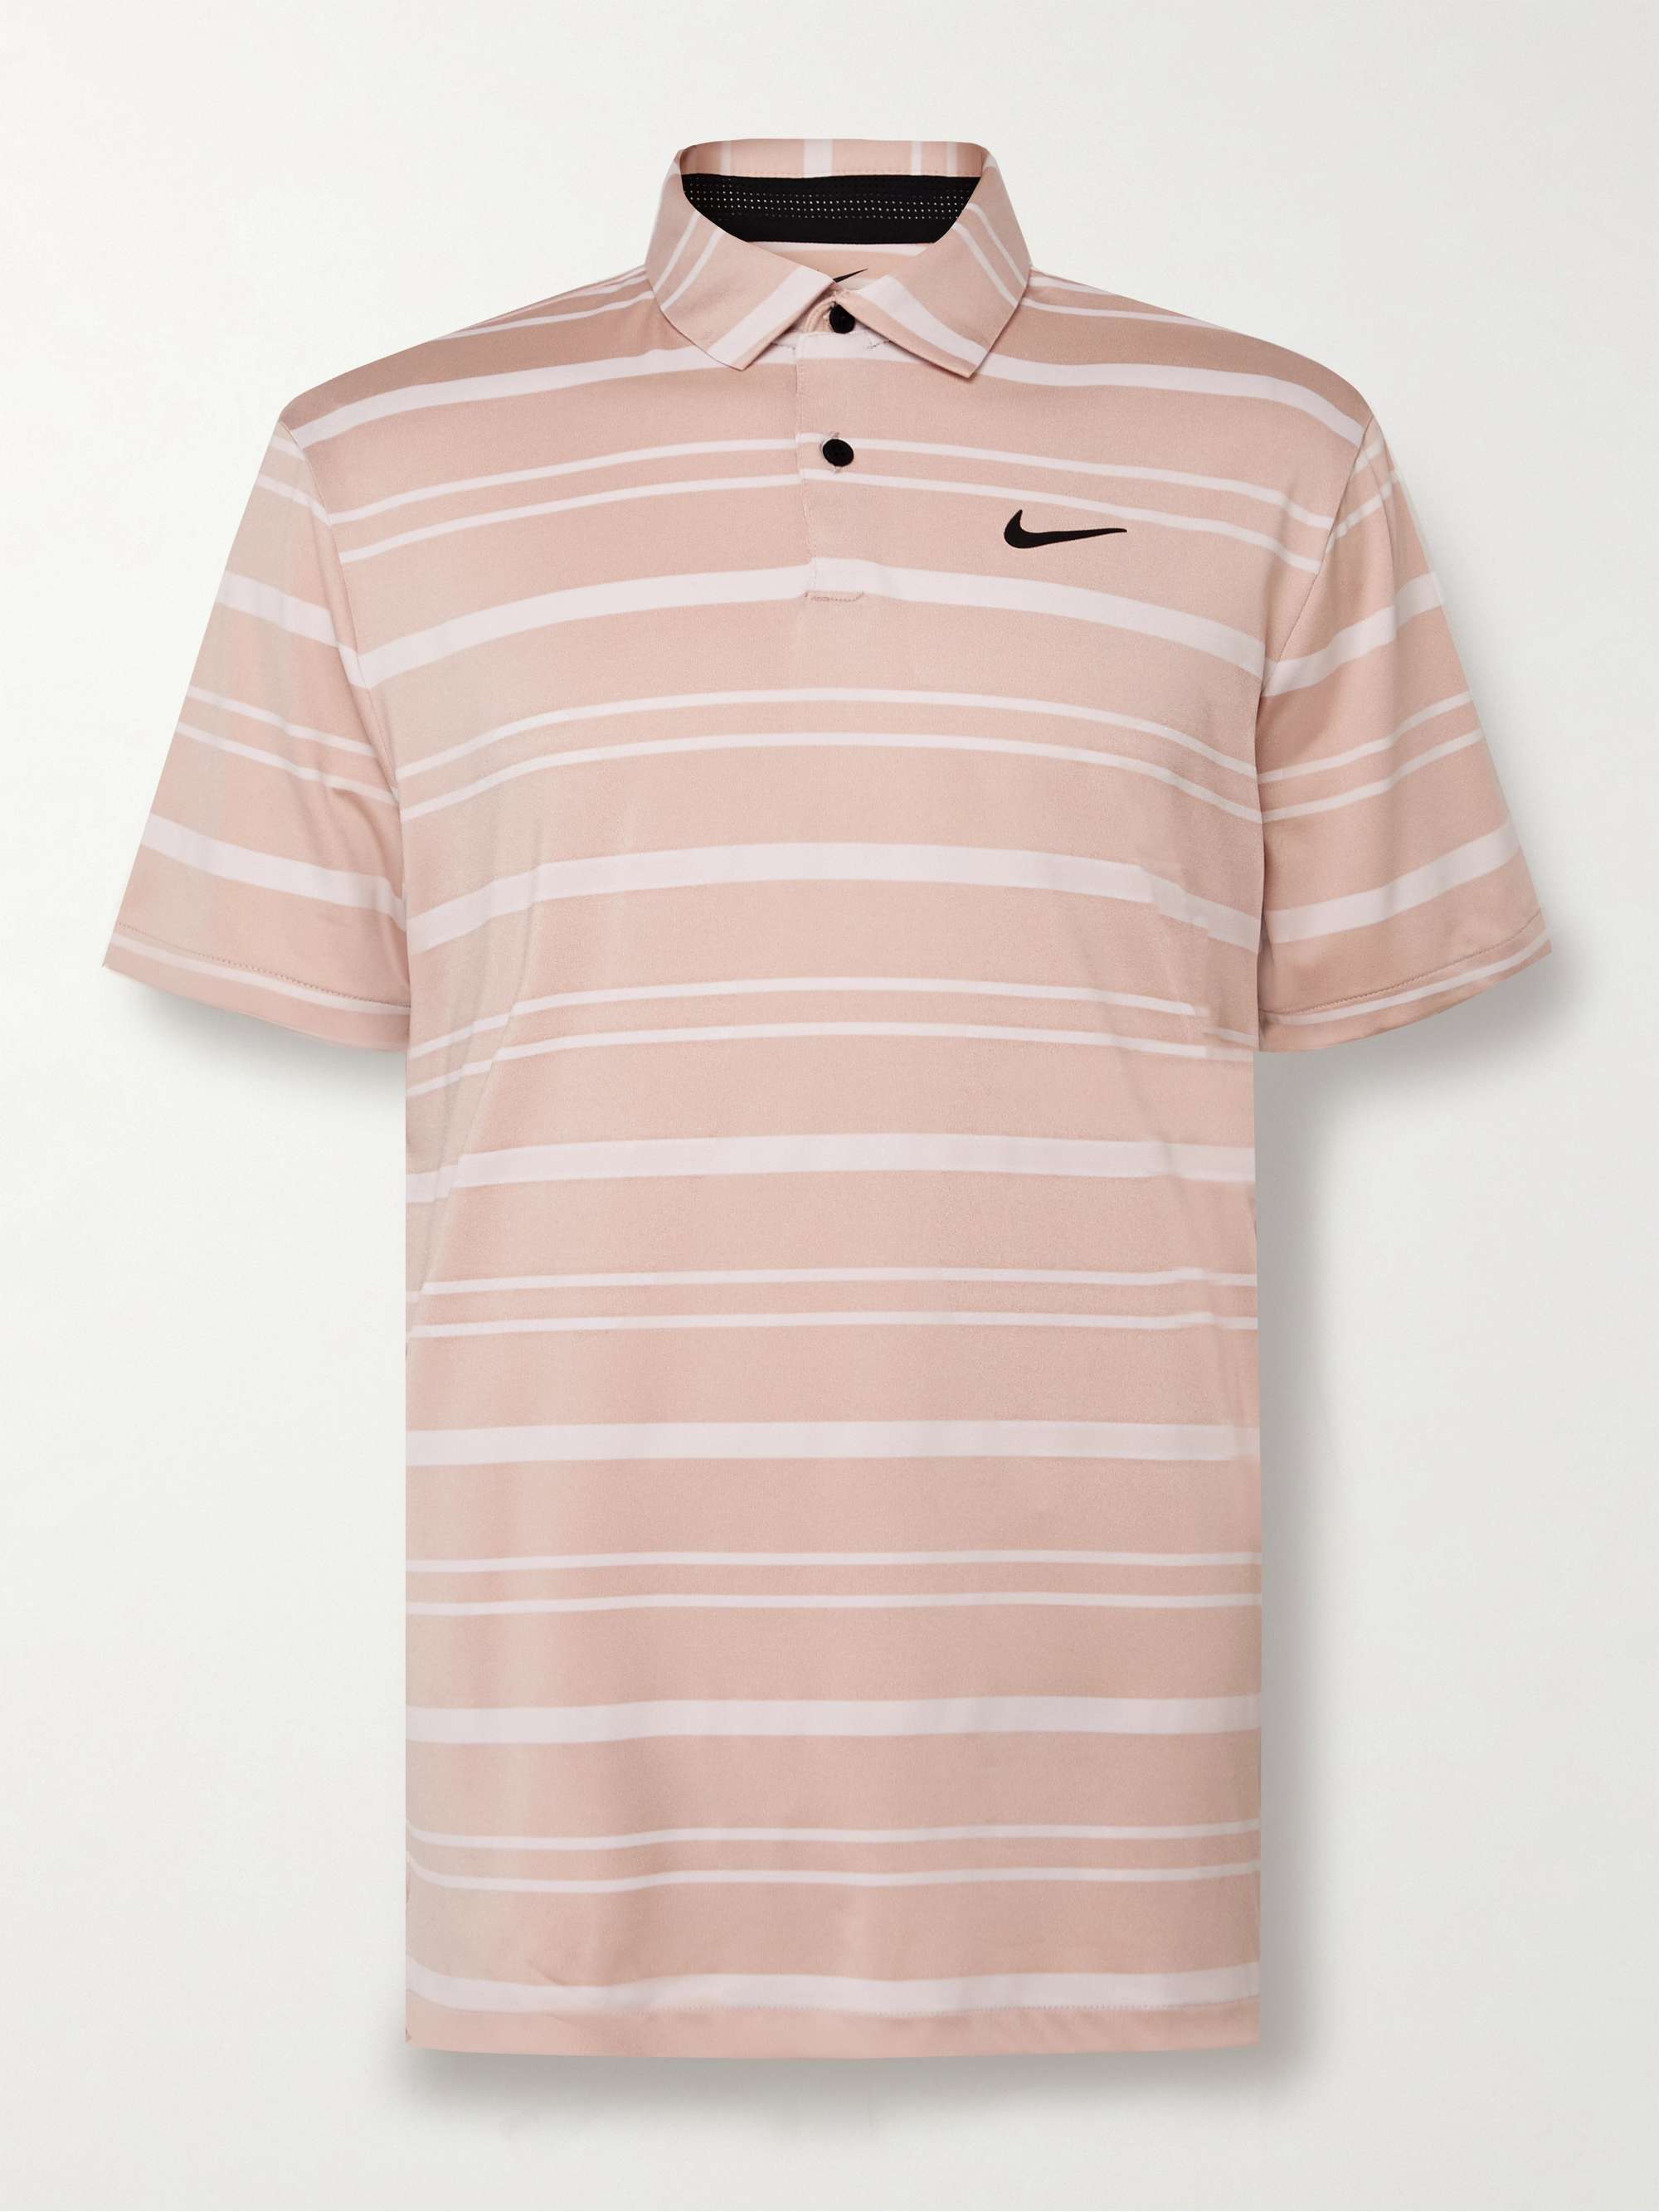 NIKE GOLF Tour Striped Dri-FIT Golf Polo Shirt for Men | MR PORTER